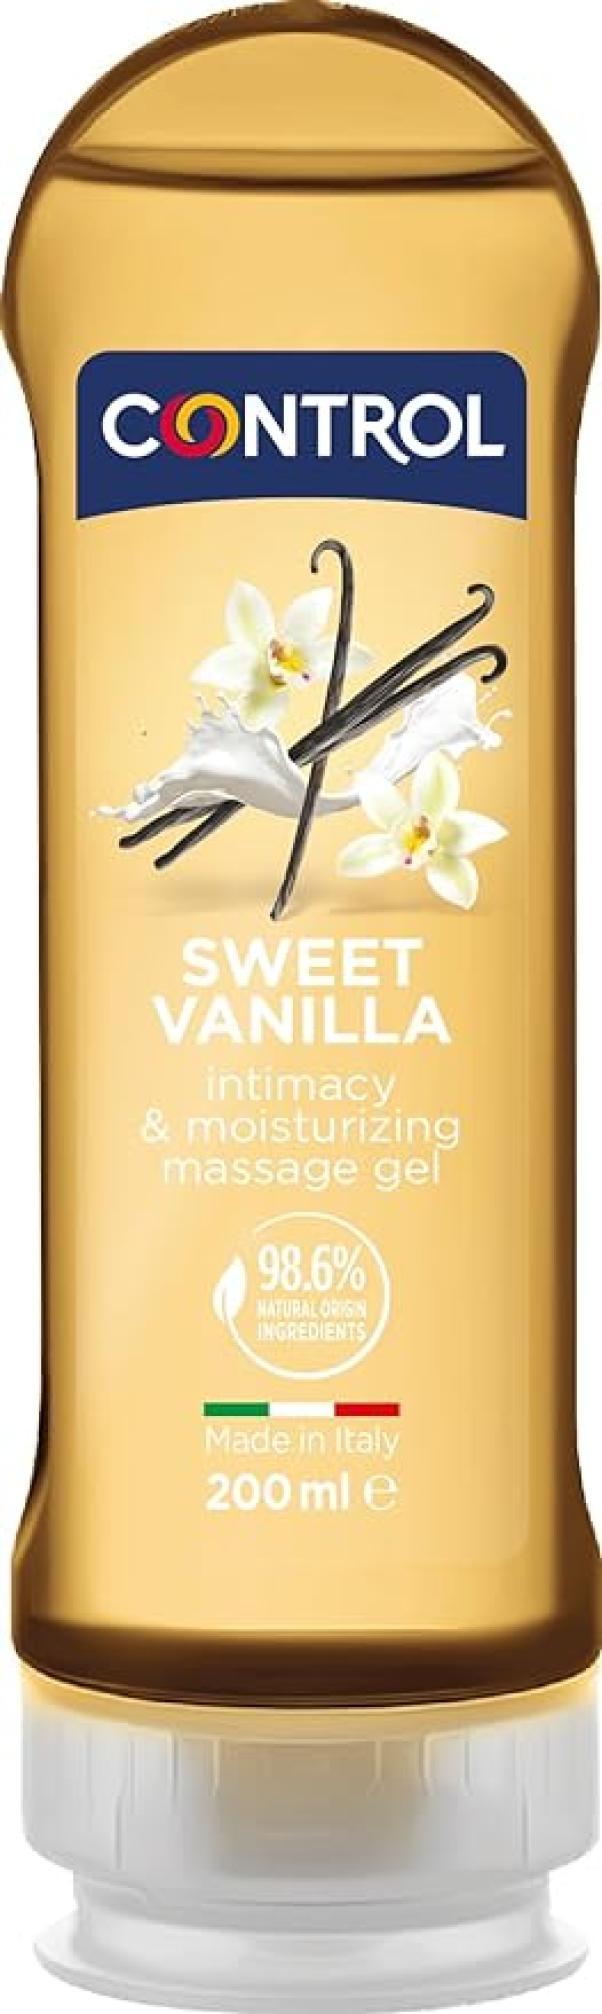 Gel massaggio 2 in 1 Control Sweet Vanilla 200ml